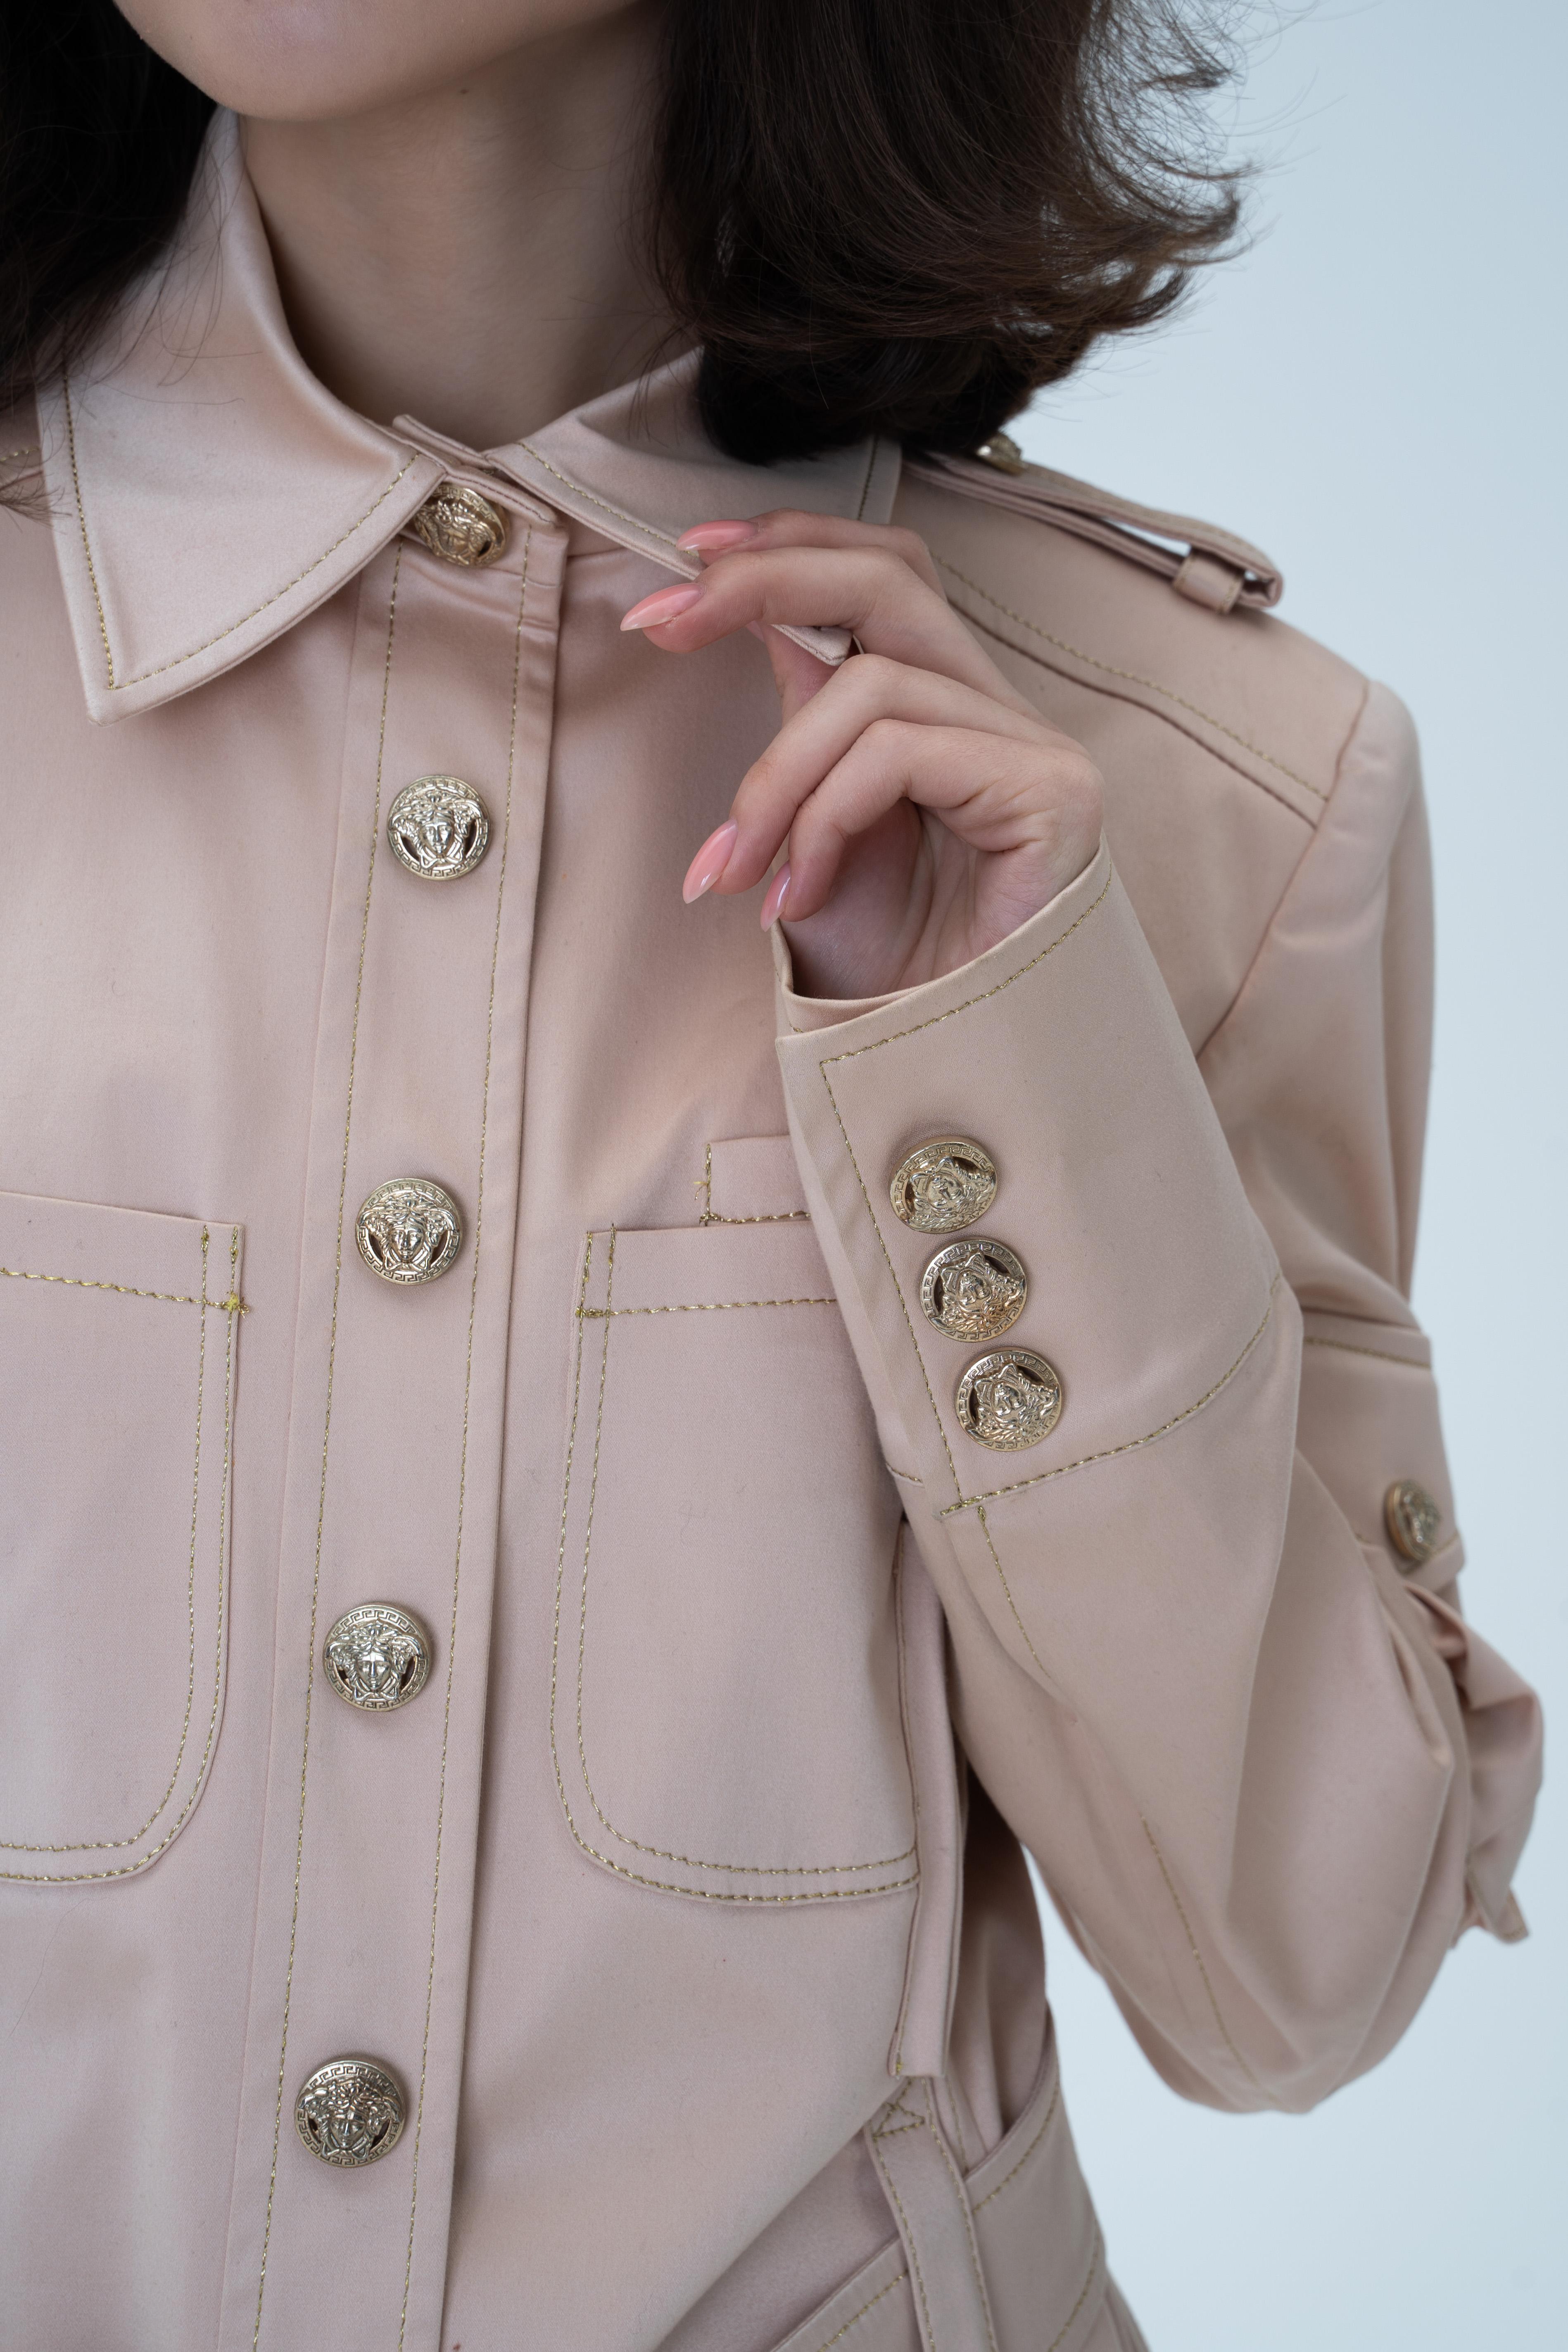 Women's Iconic Versace S/S 2005 Medusa Head Button Blazer Jacket rare For Sale